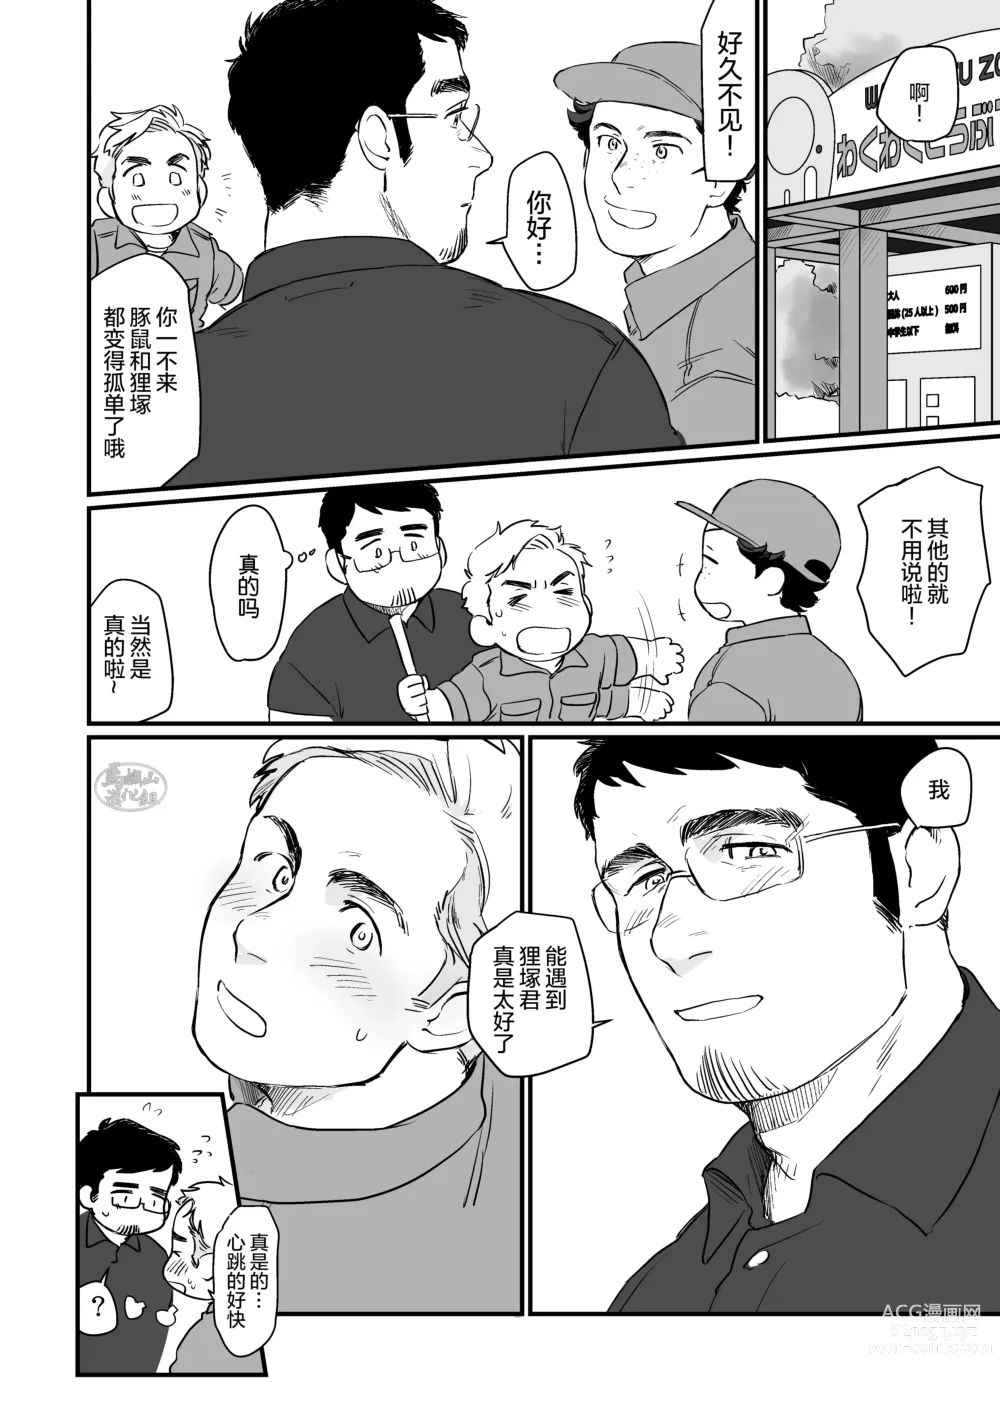 Page 18 of manga ビースティコンプレックス.动物狂想曲